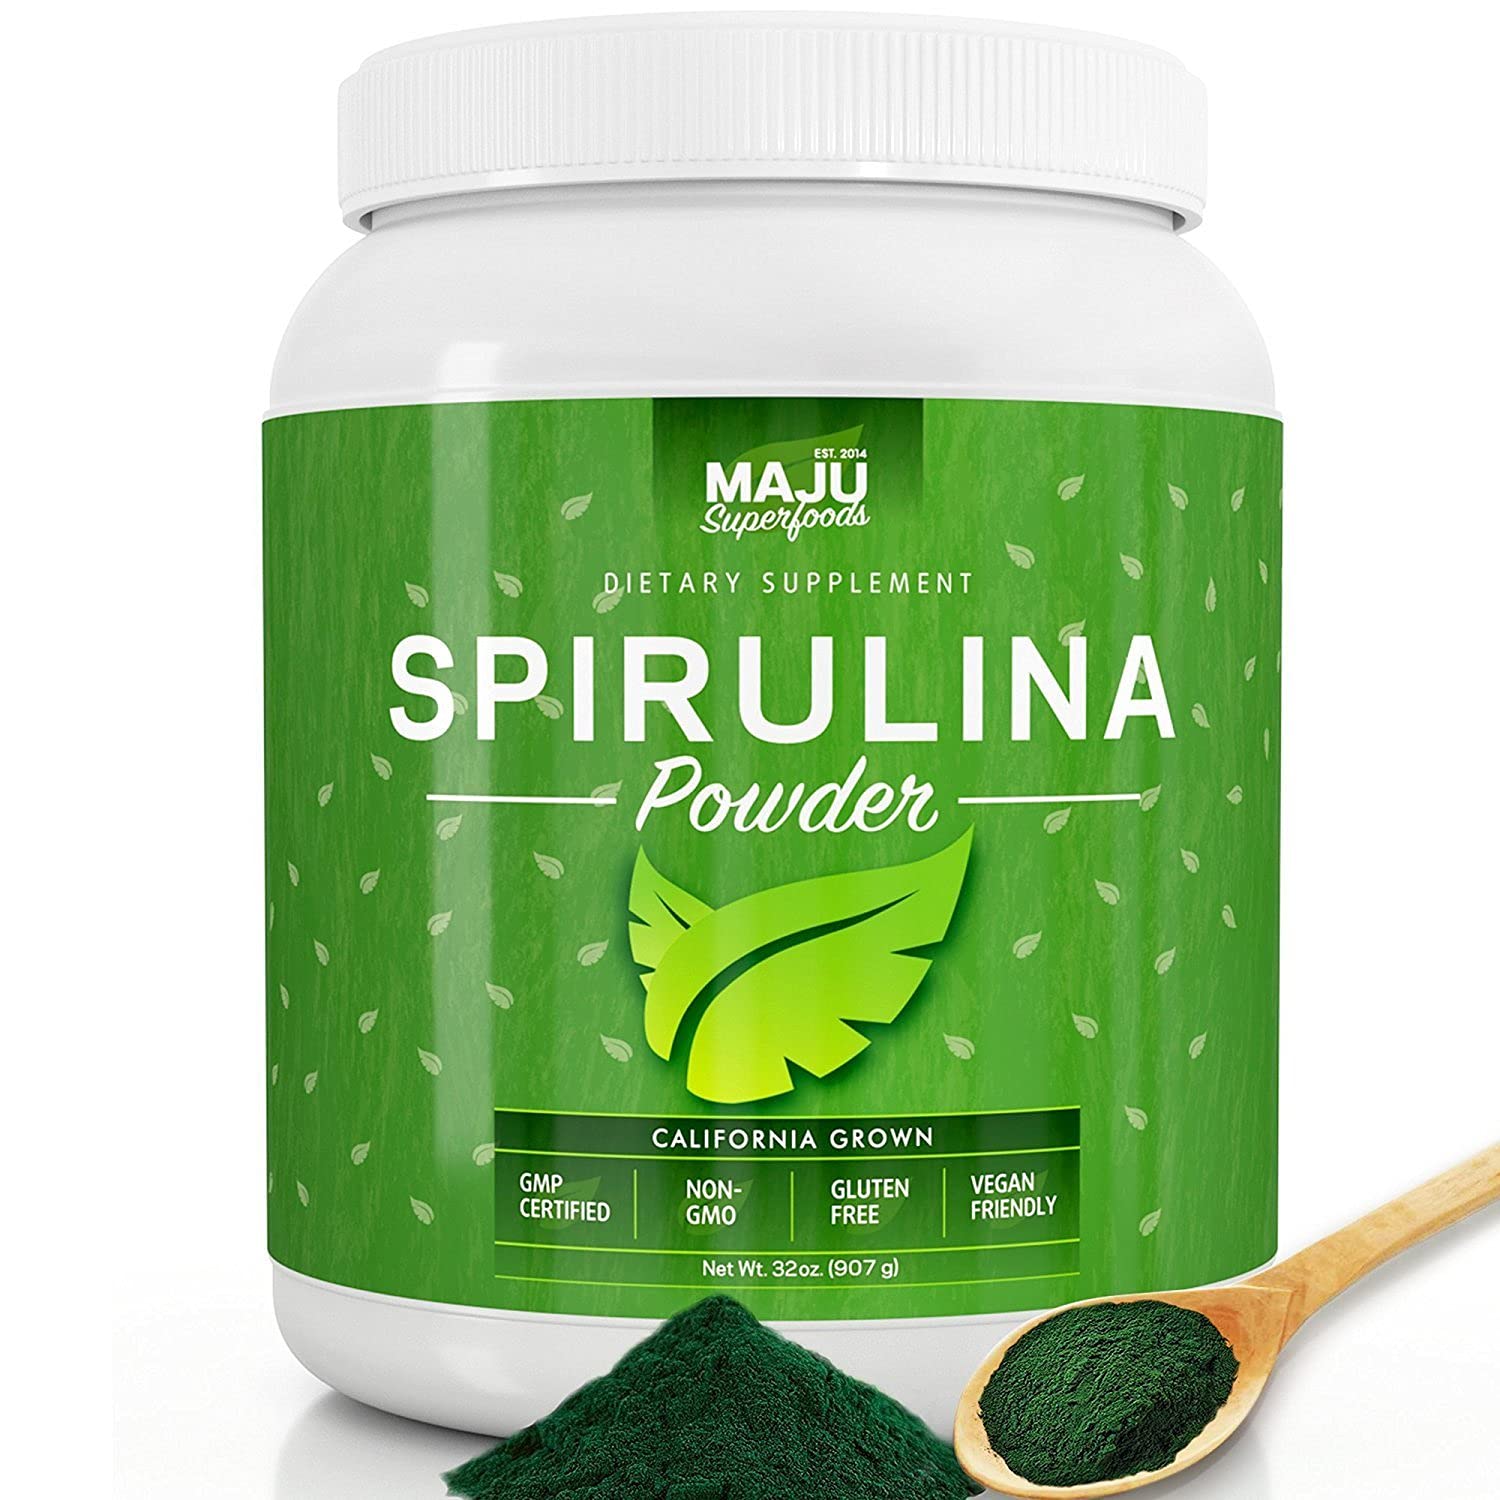 MAJU's California Grown Spirulina Powder (2 Pound): Non-Irradiated, Non-GMO, Spirulina Recipe eBook with Purchase, Vegan, Gluten-Free